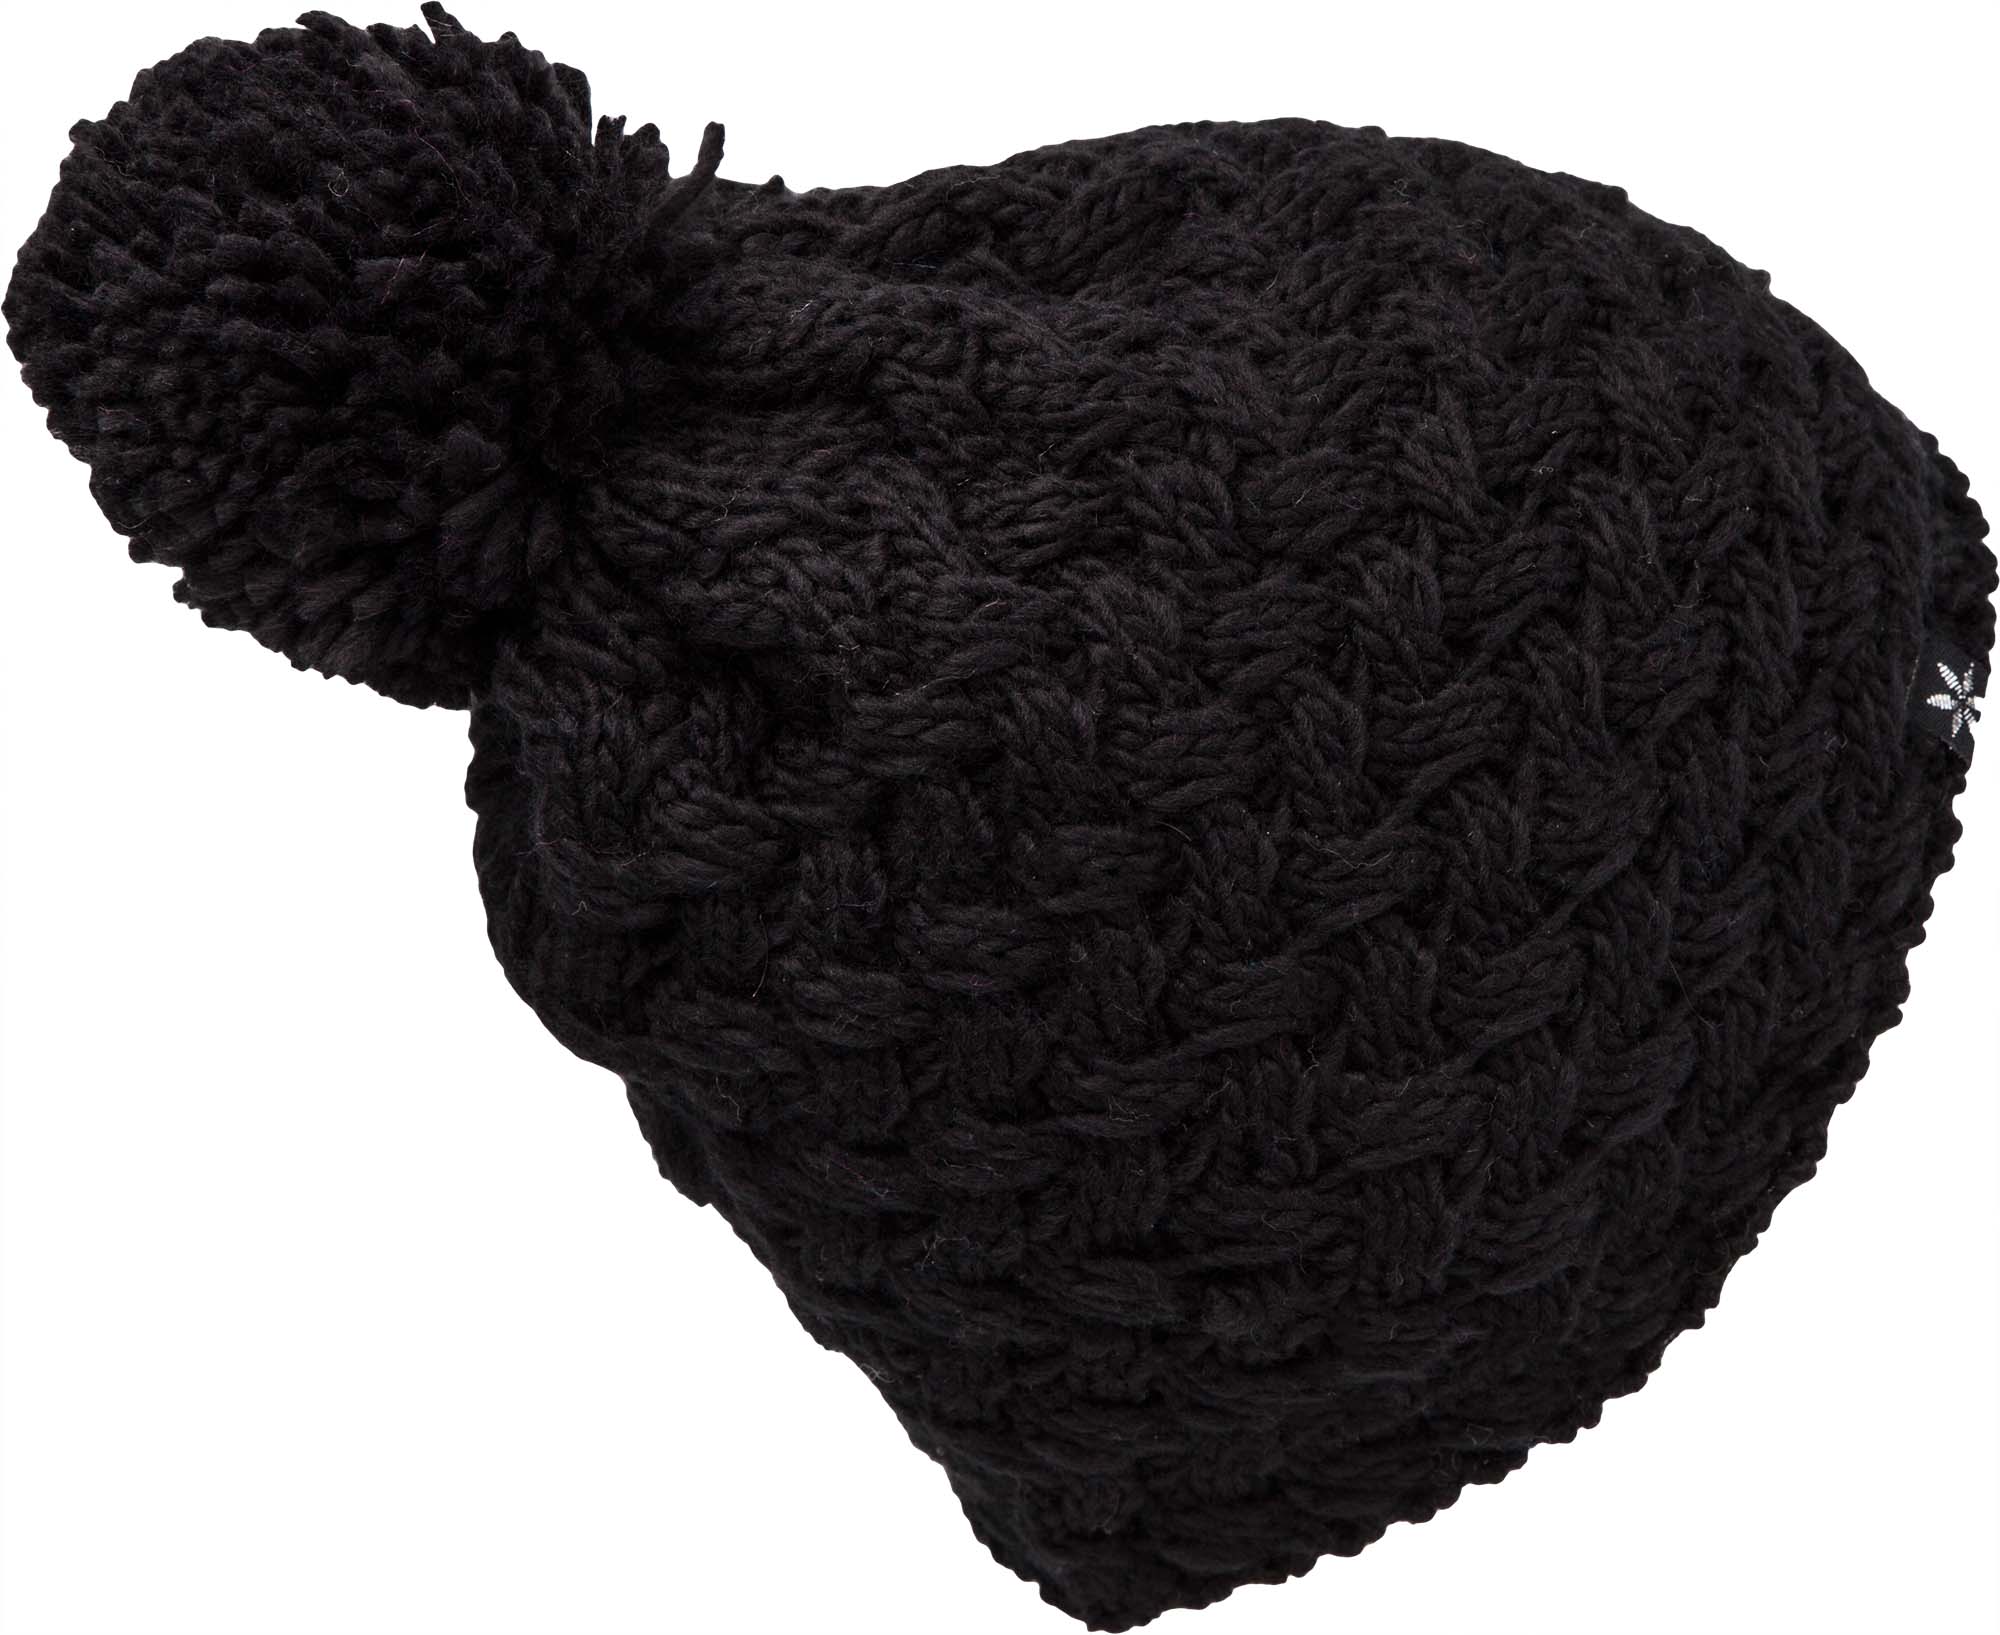 Women’s knitted bobble hat